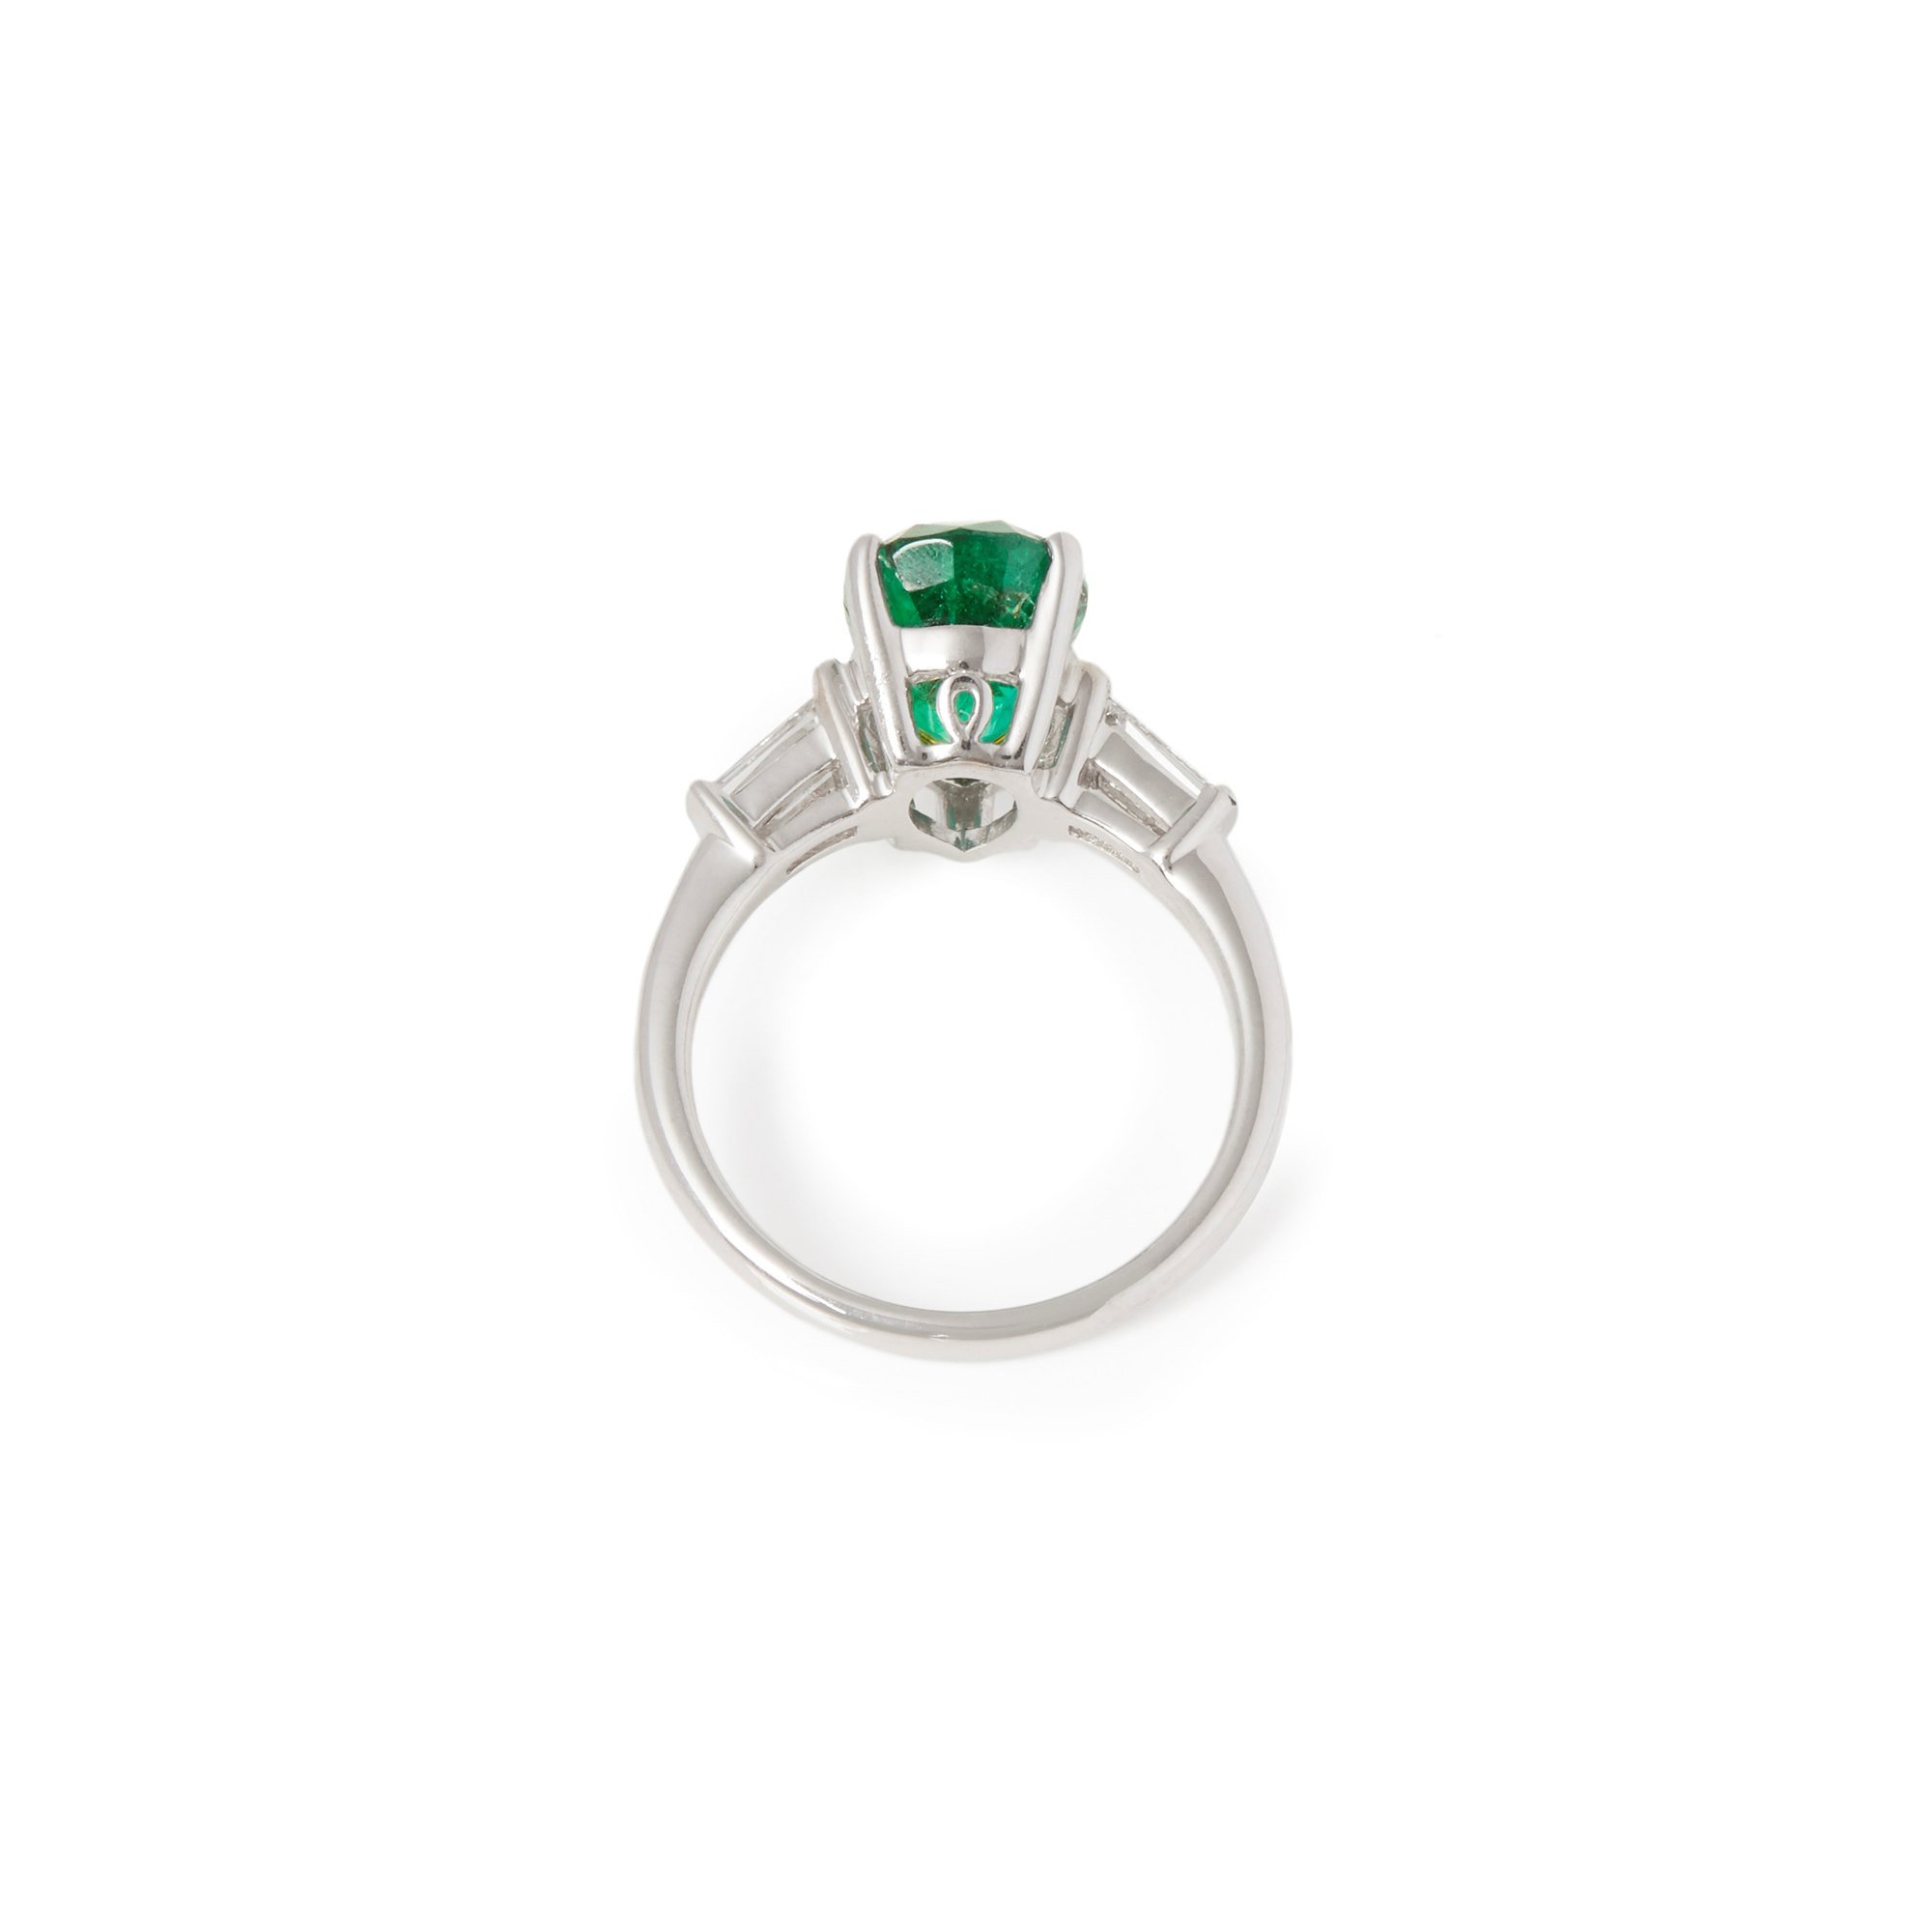 David Jerome Certified 3.45ct Pear Cut Emerald and Diamond Ring